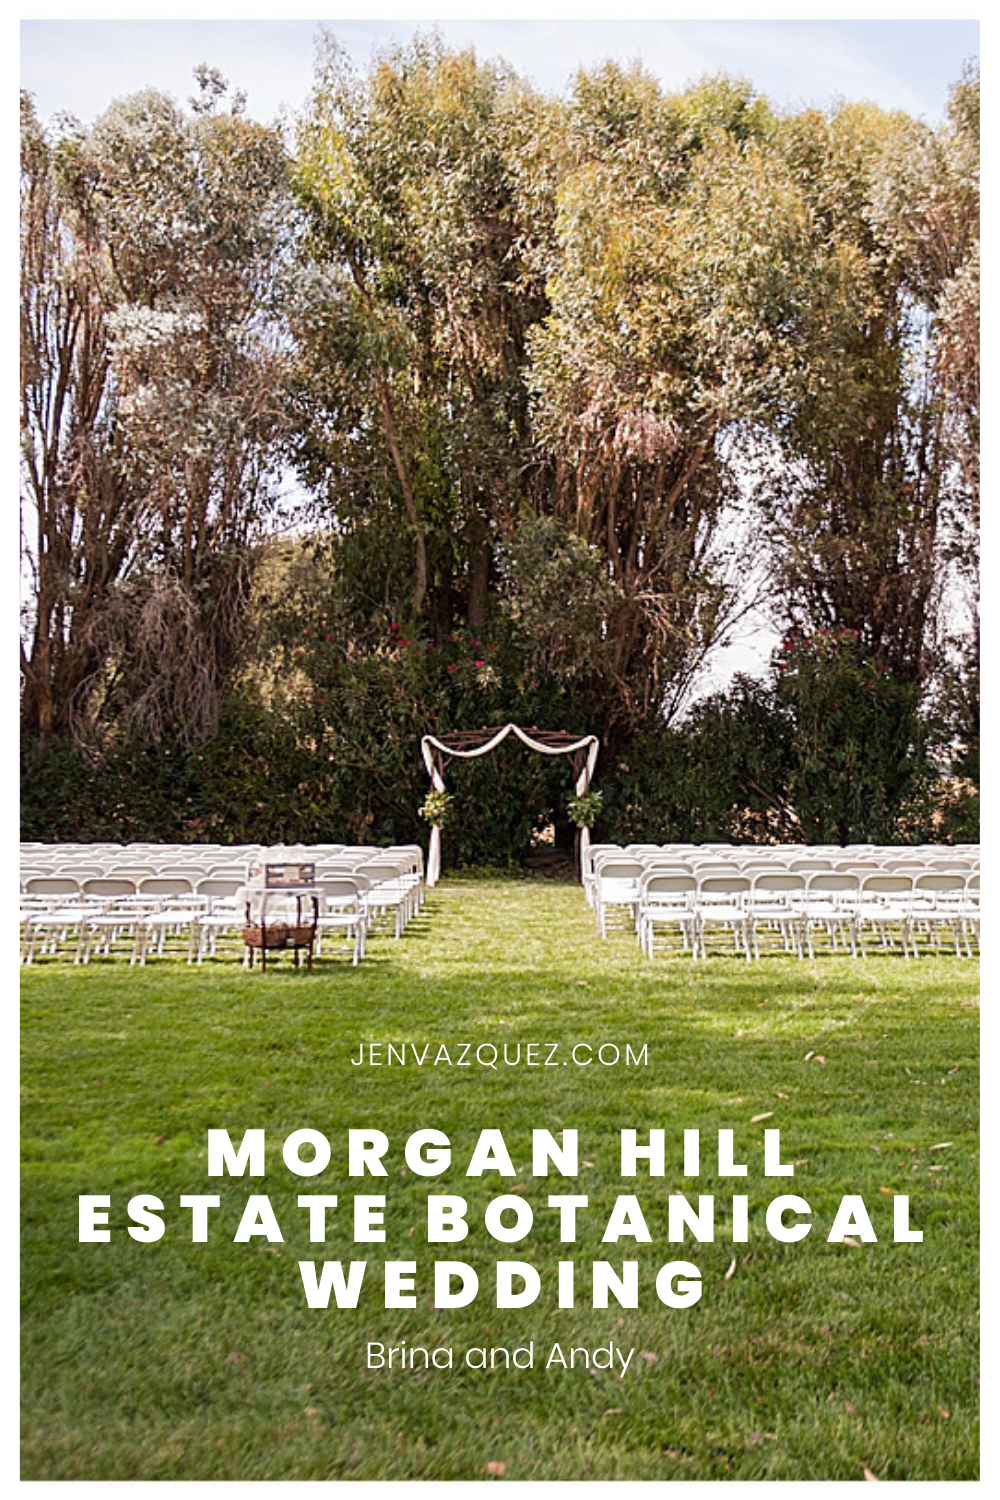 Morgan Hill Estate Botanical Wedding - Brina and Andy by Jen Vazquez 